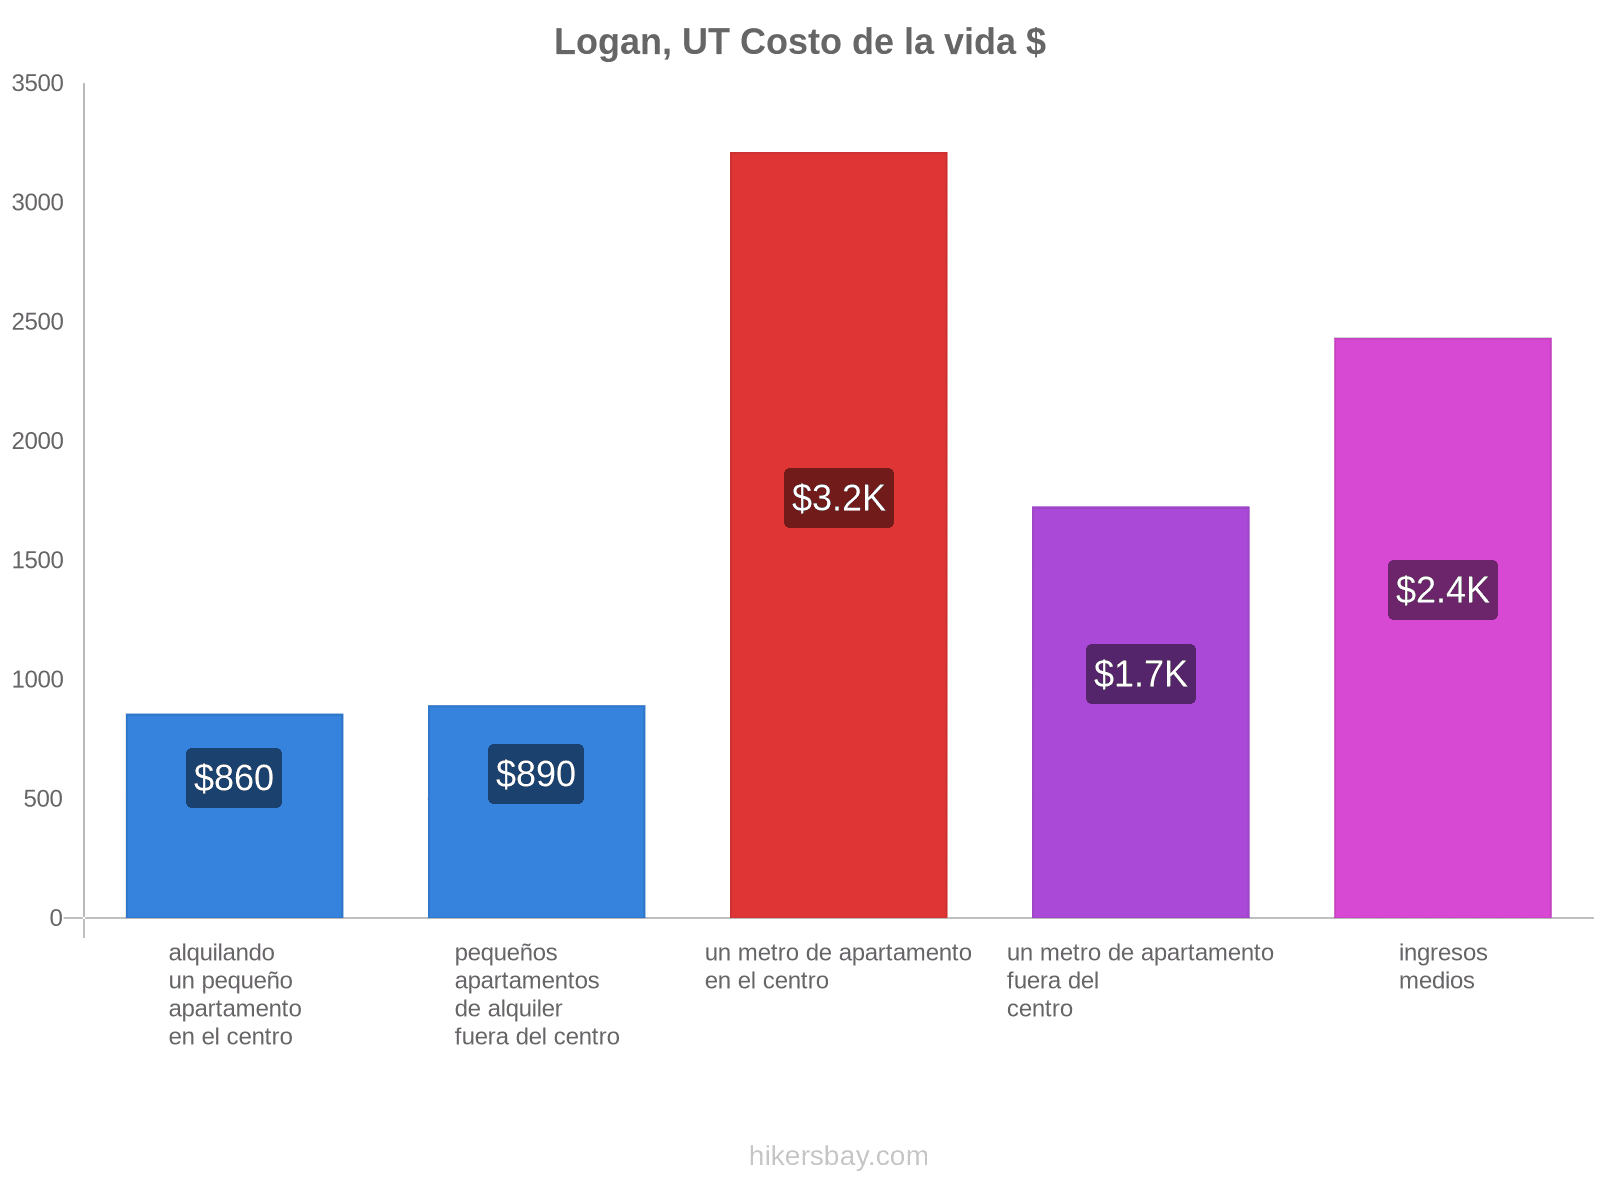 Logan, UT costo de la vida hikersbay.com